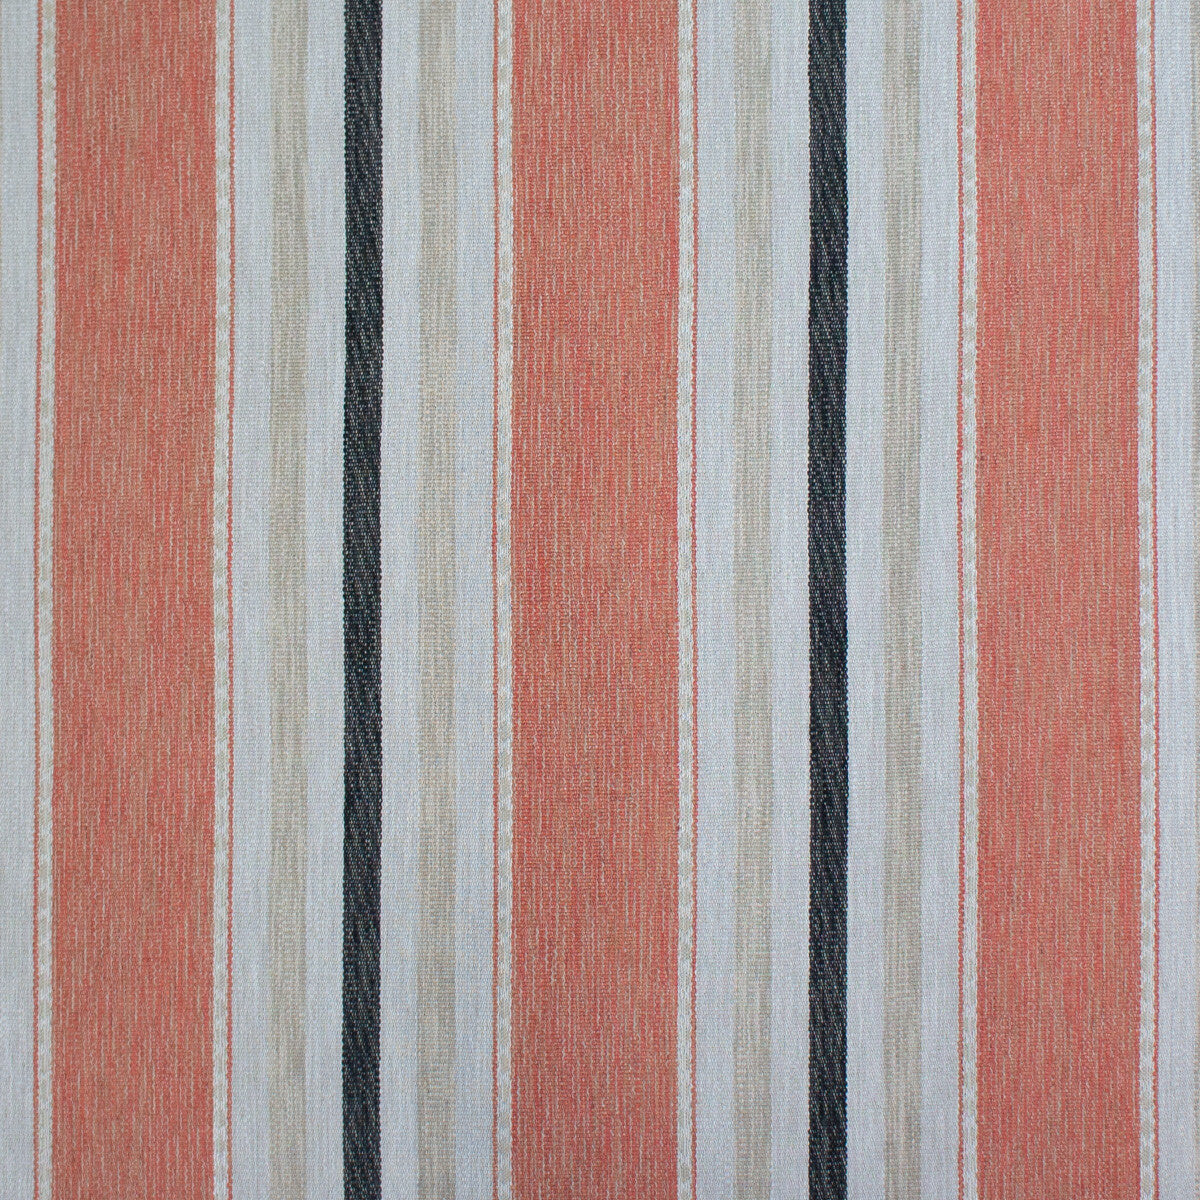 Albuquerque fabric in coral color - pattern GDT5151.008.0 - by Gaston y Daniela in the Gaston Rio Grande collection